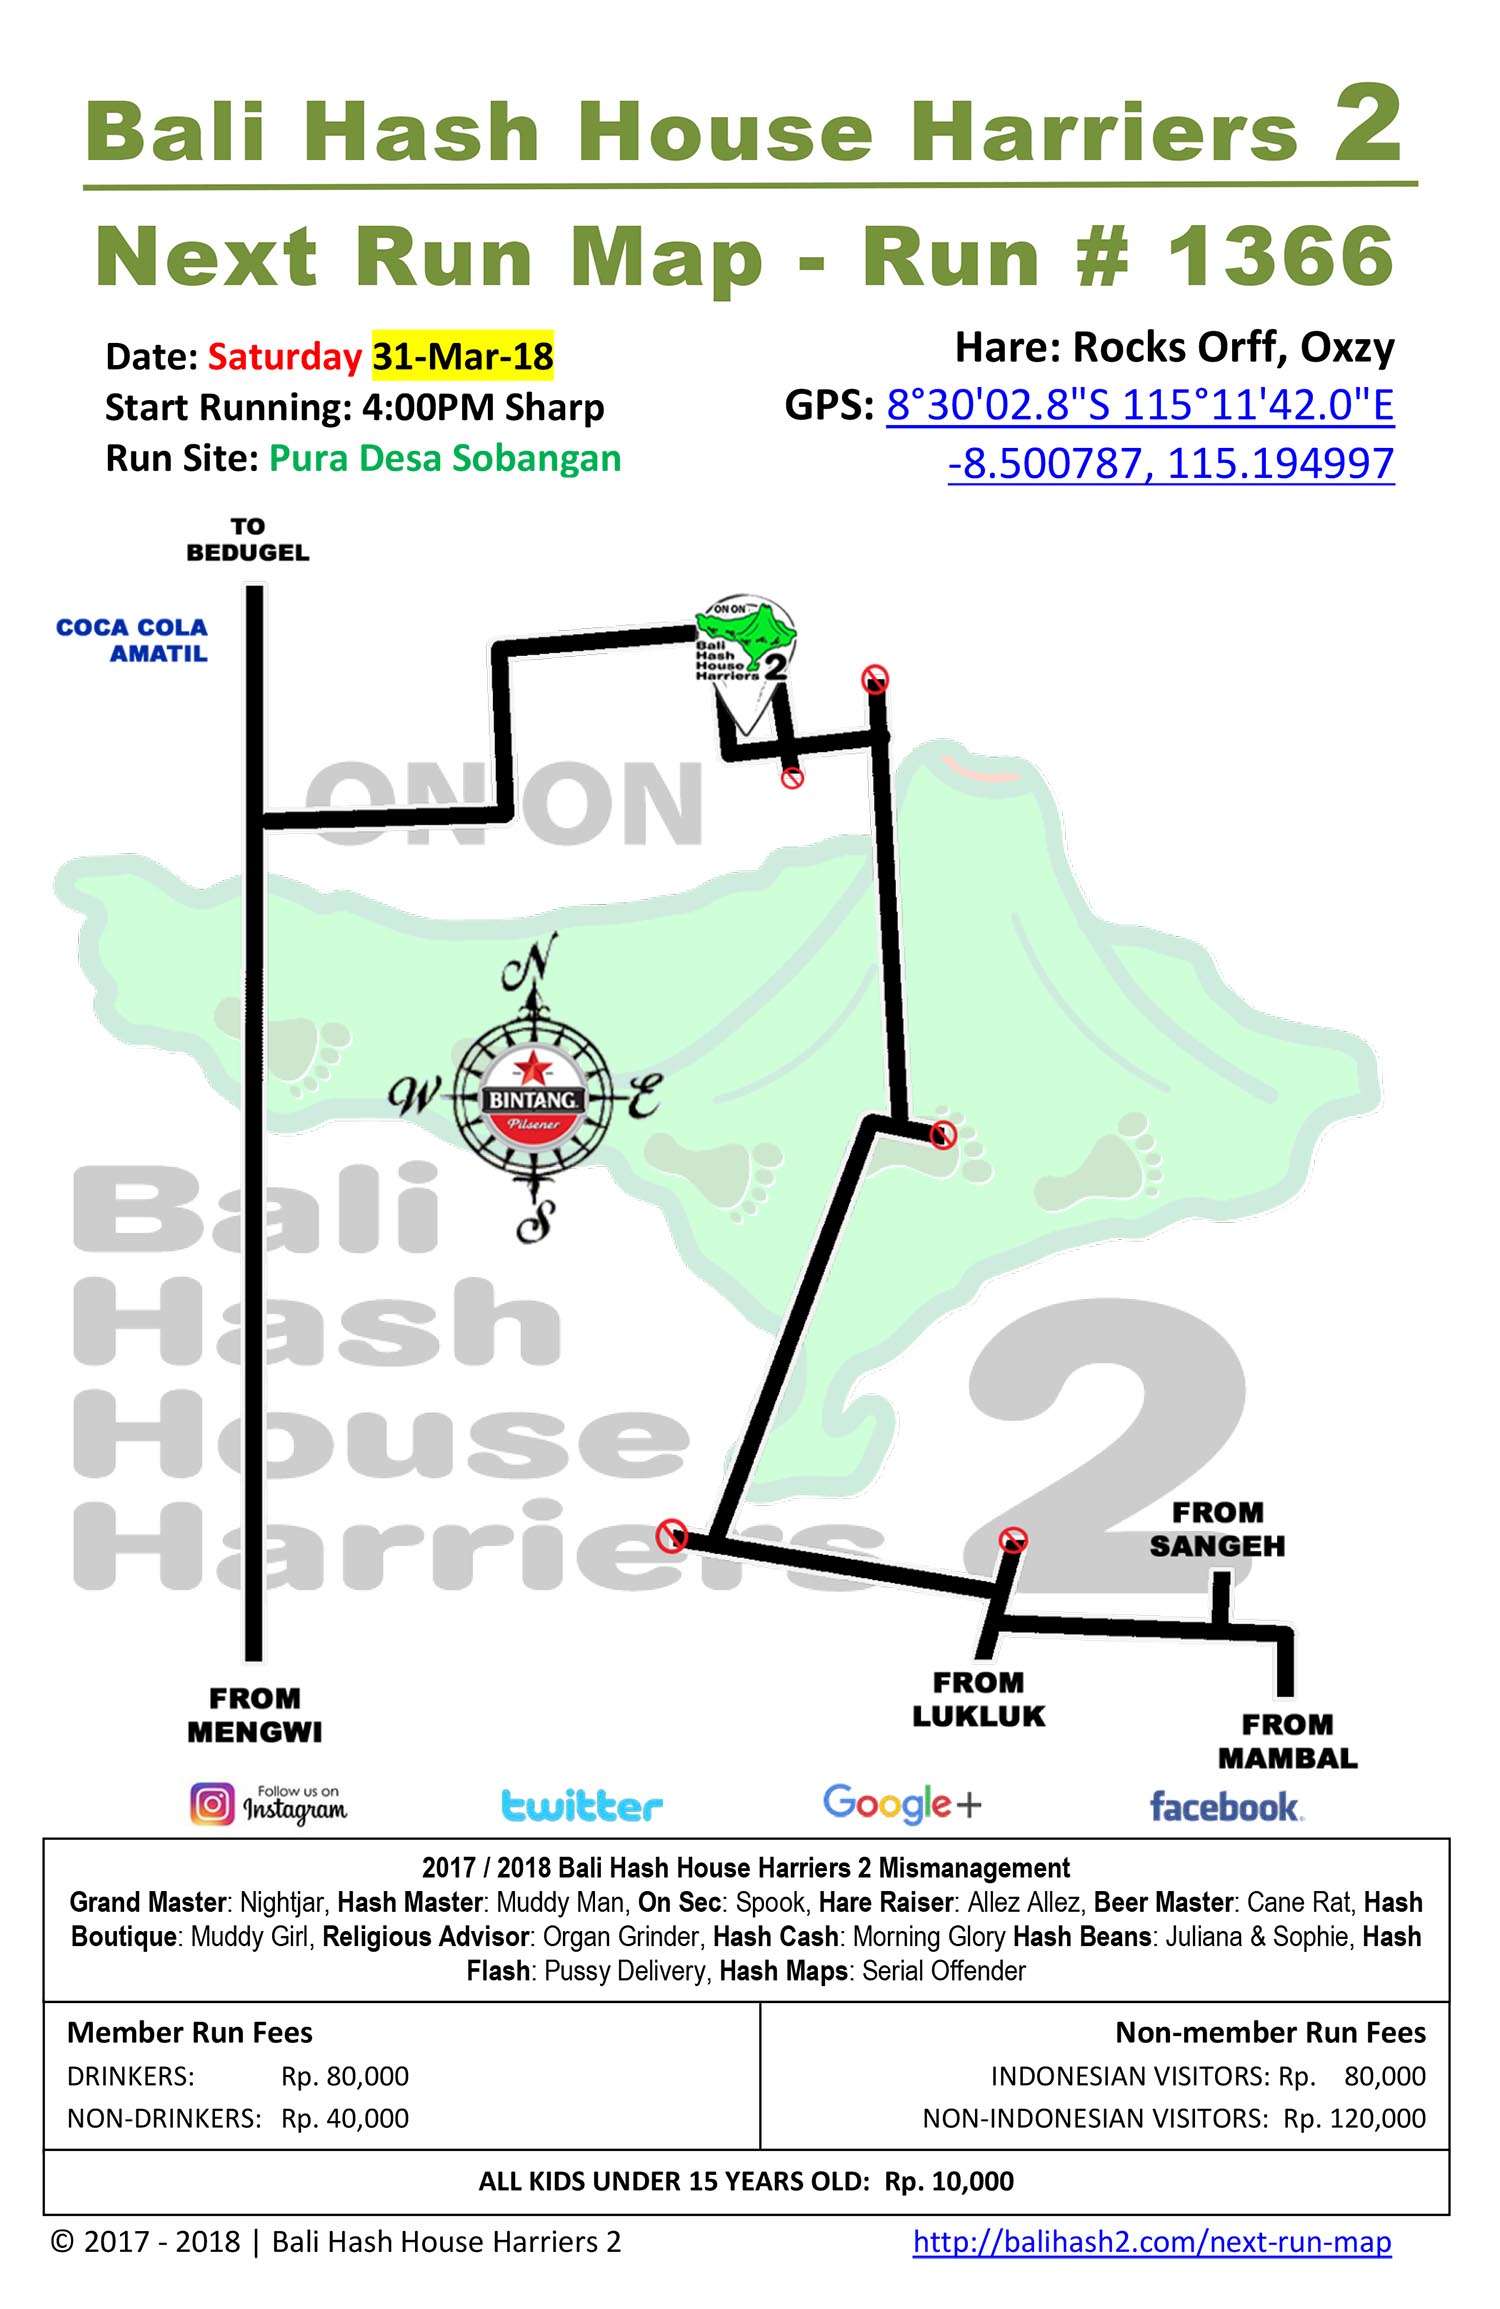 BHHH2 Next Run Map #1366 Pura Desa Sobangan Saturday 31-Mar-18